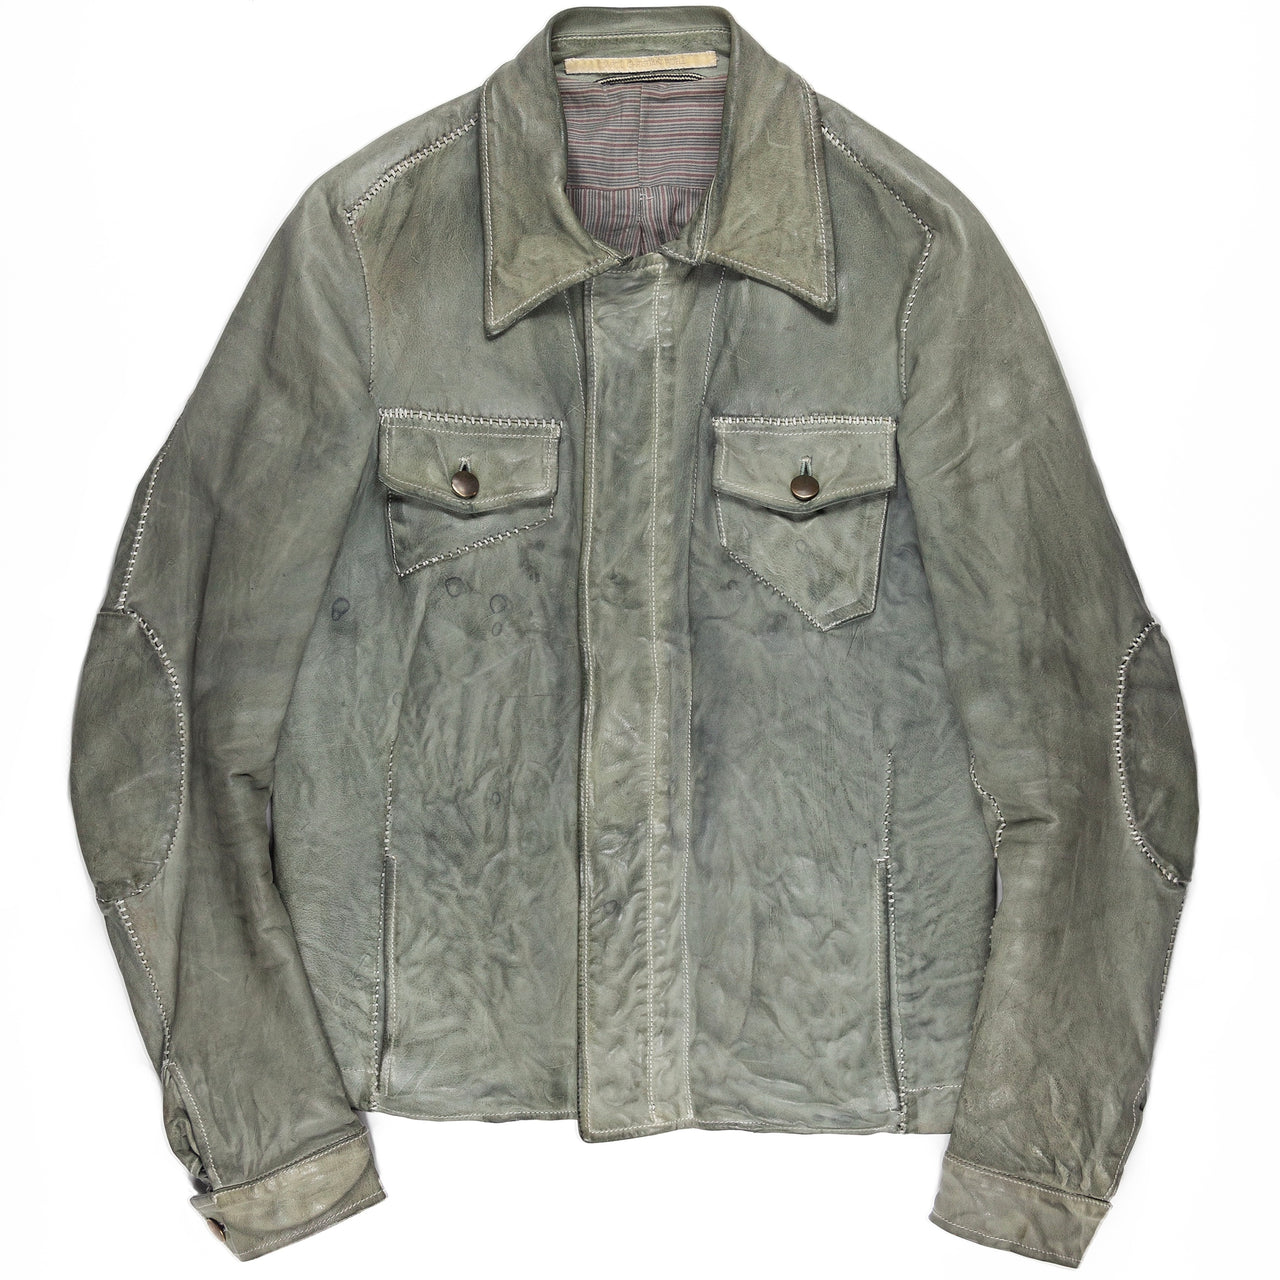 Carol Christian Poell LM/2008 ZAG-PTC/5  Leather Overlock Jacket - AW05 “On Demand”